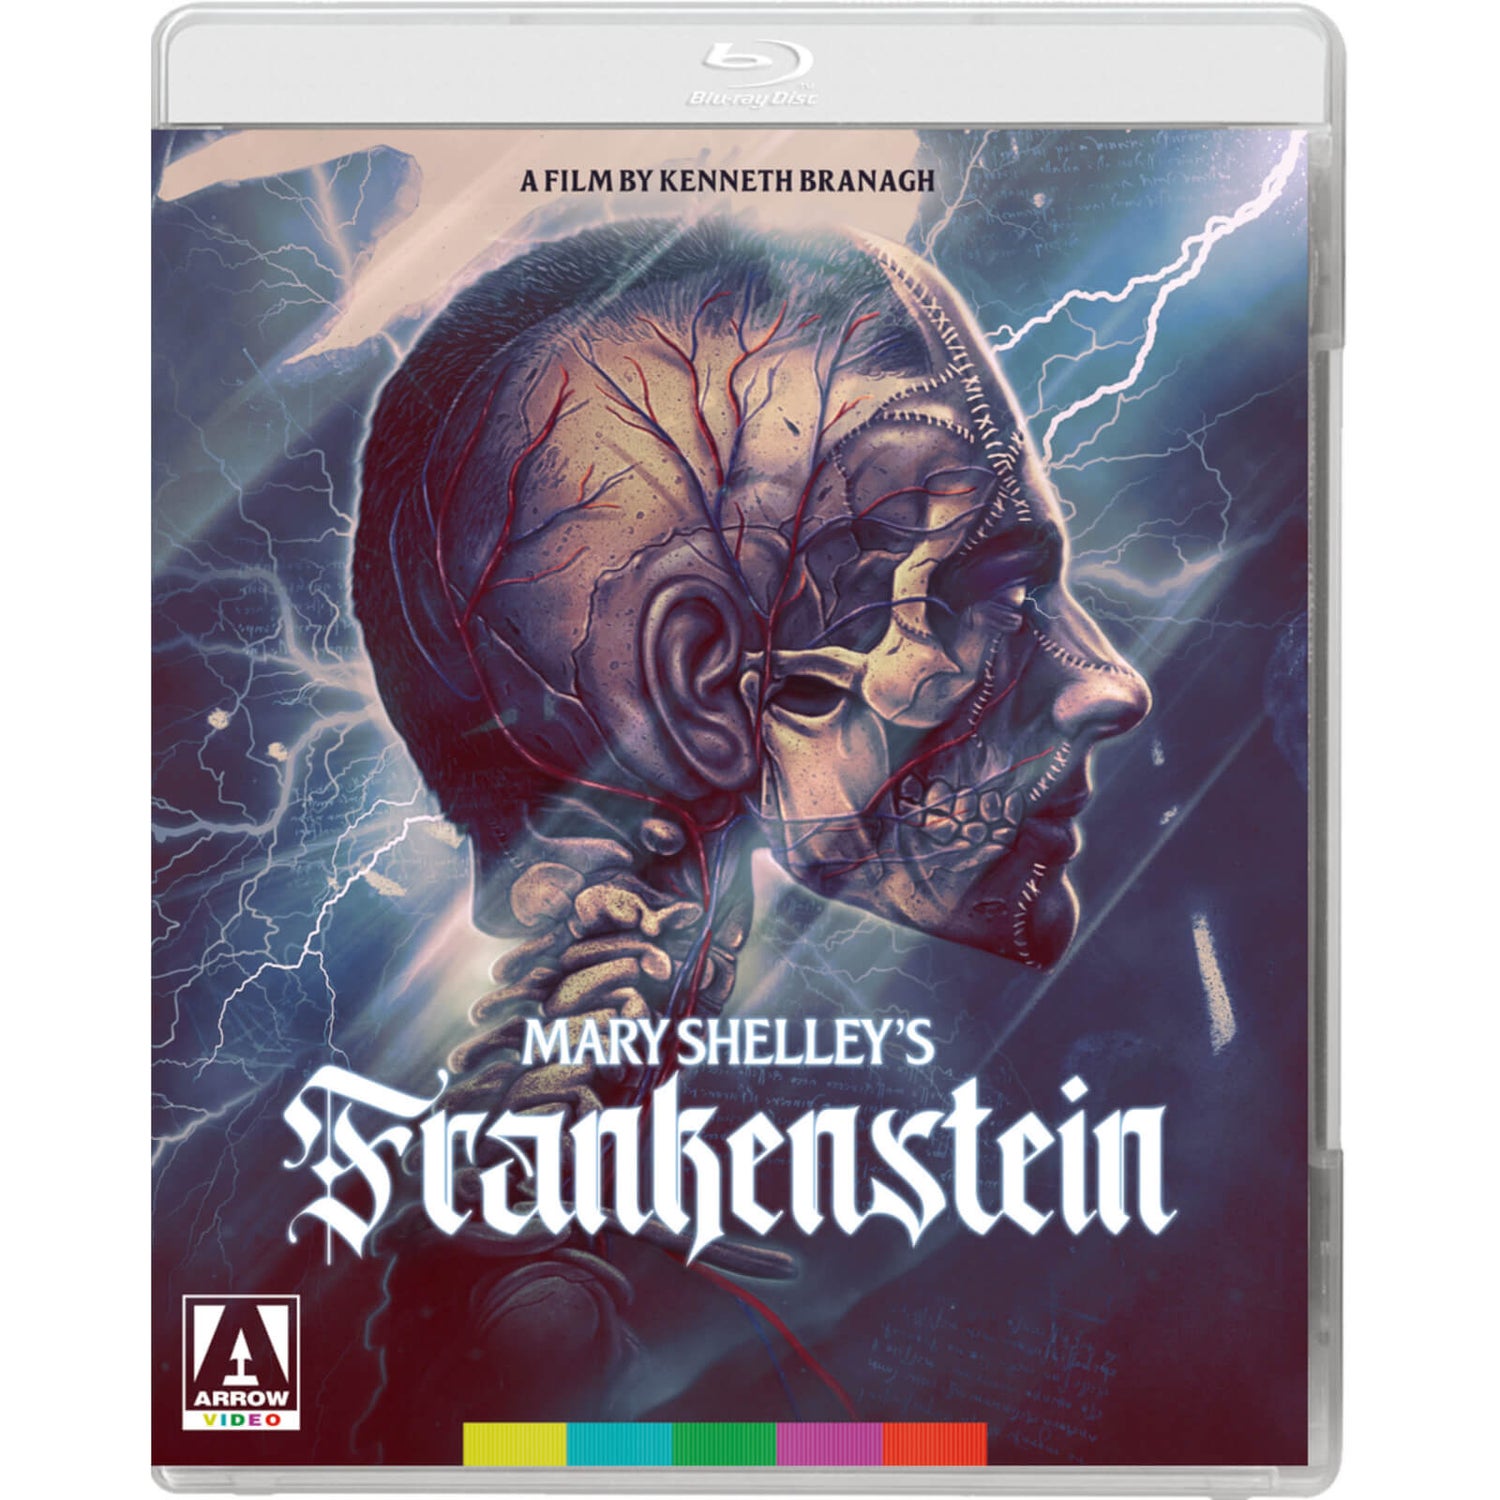 Mary Shelley's Frankenstein Blu-ray